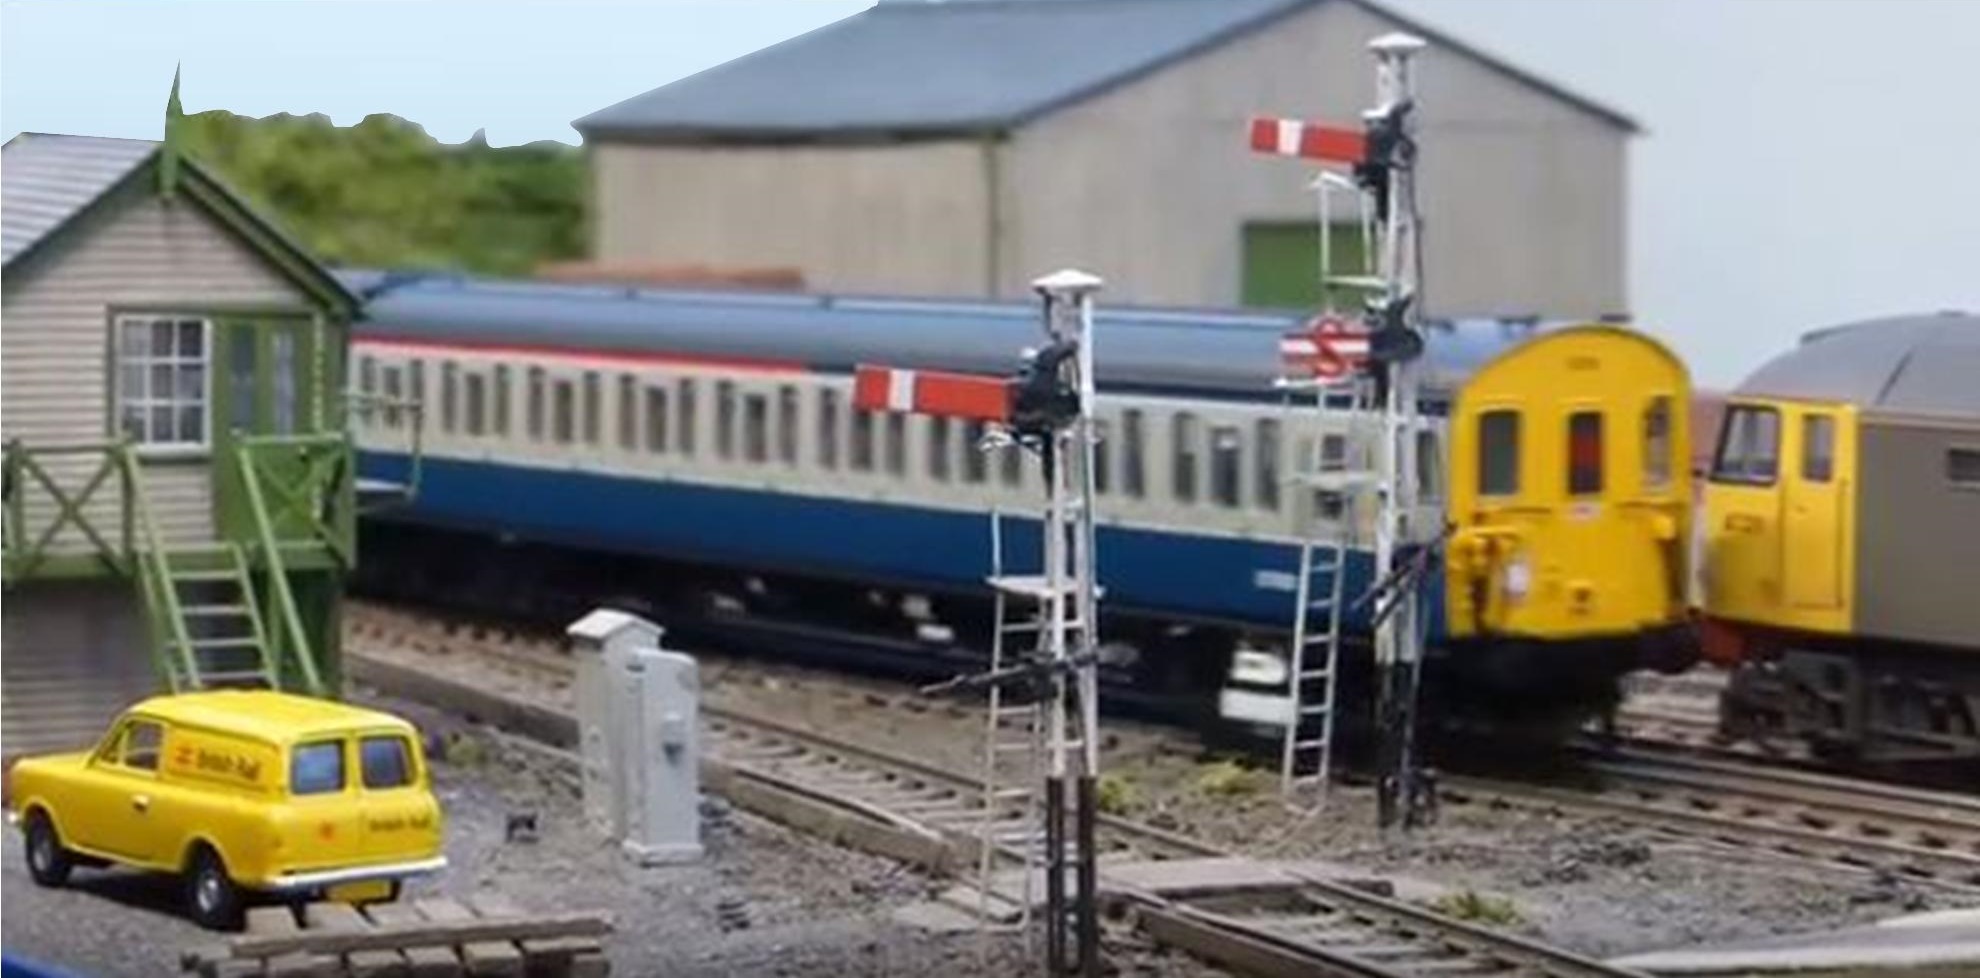 UK model railway exhibition train locomotive engines